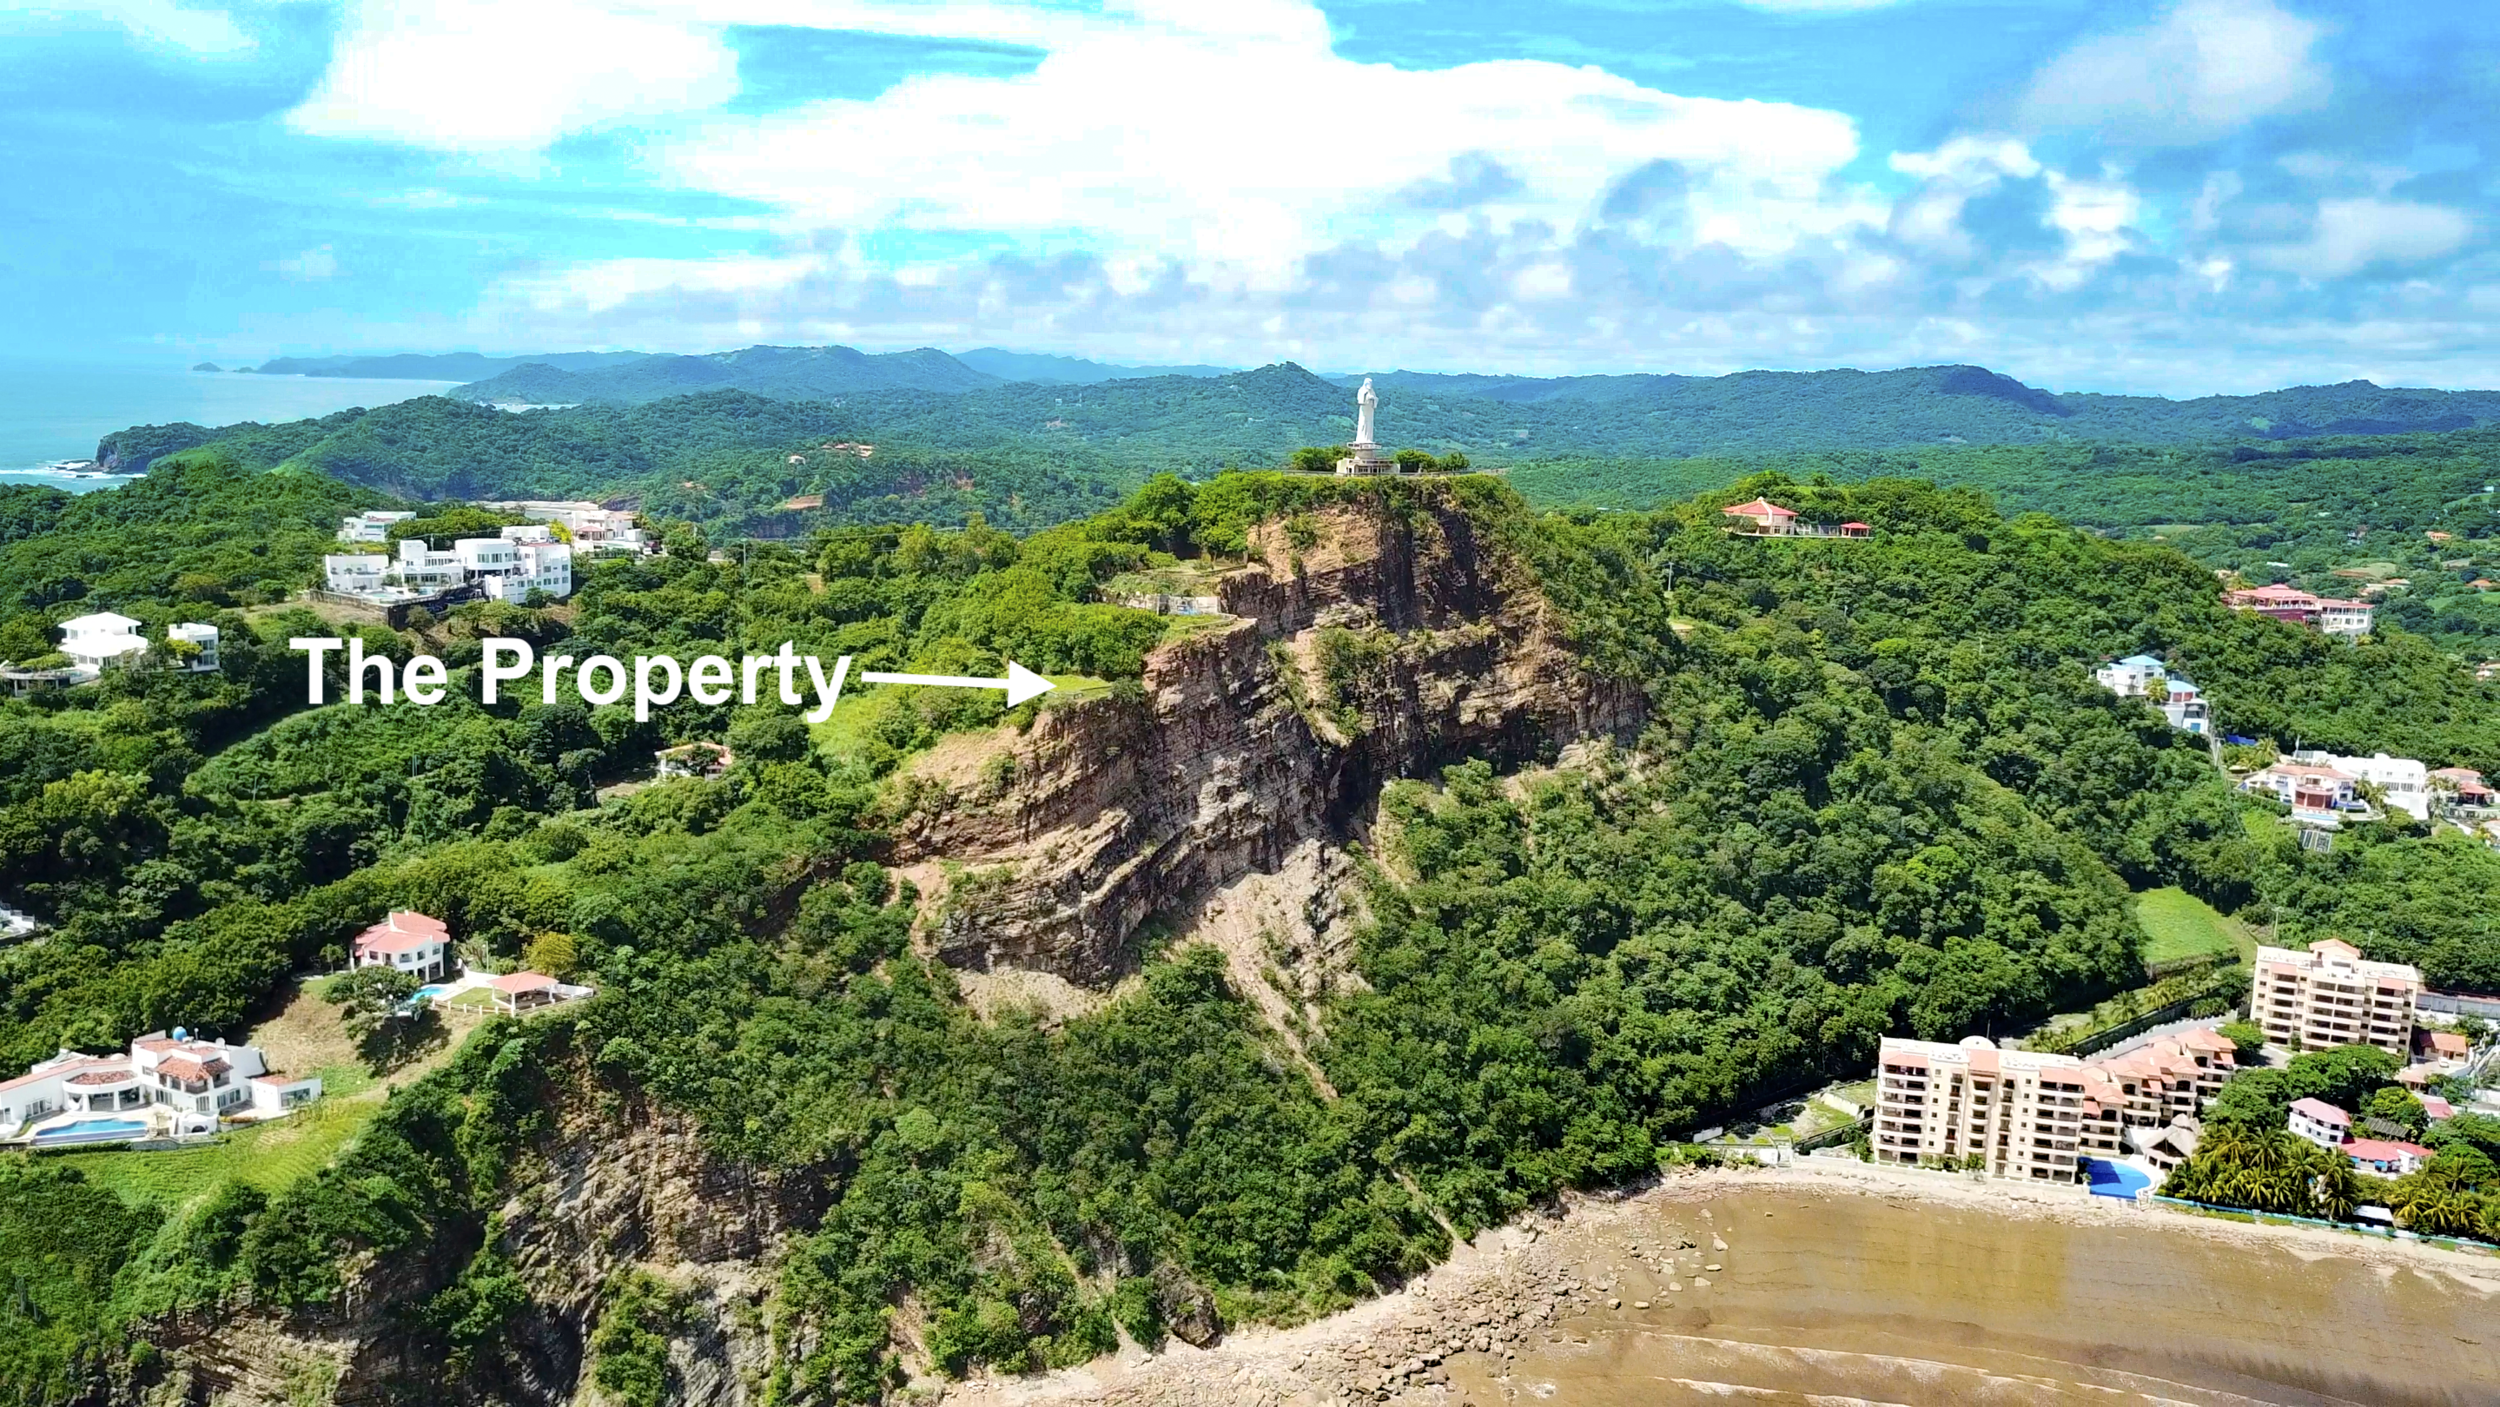 Ocean Front Cliff Lot For Sale San Juan Del Sur Nicaragua Real Estate 2.PNG